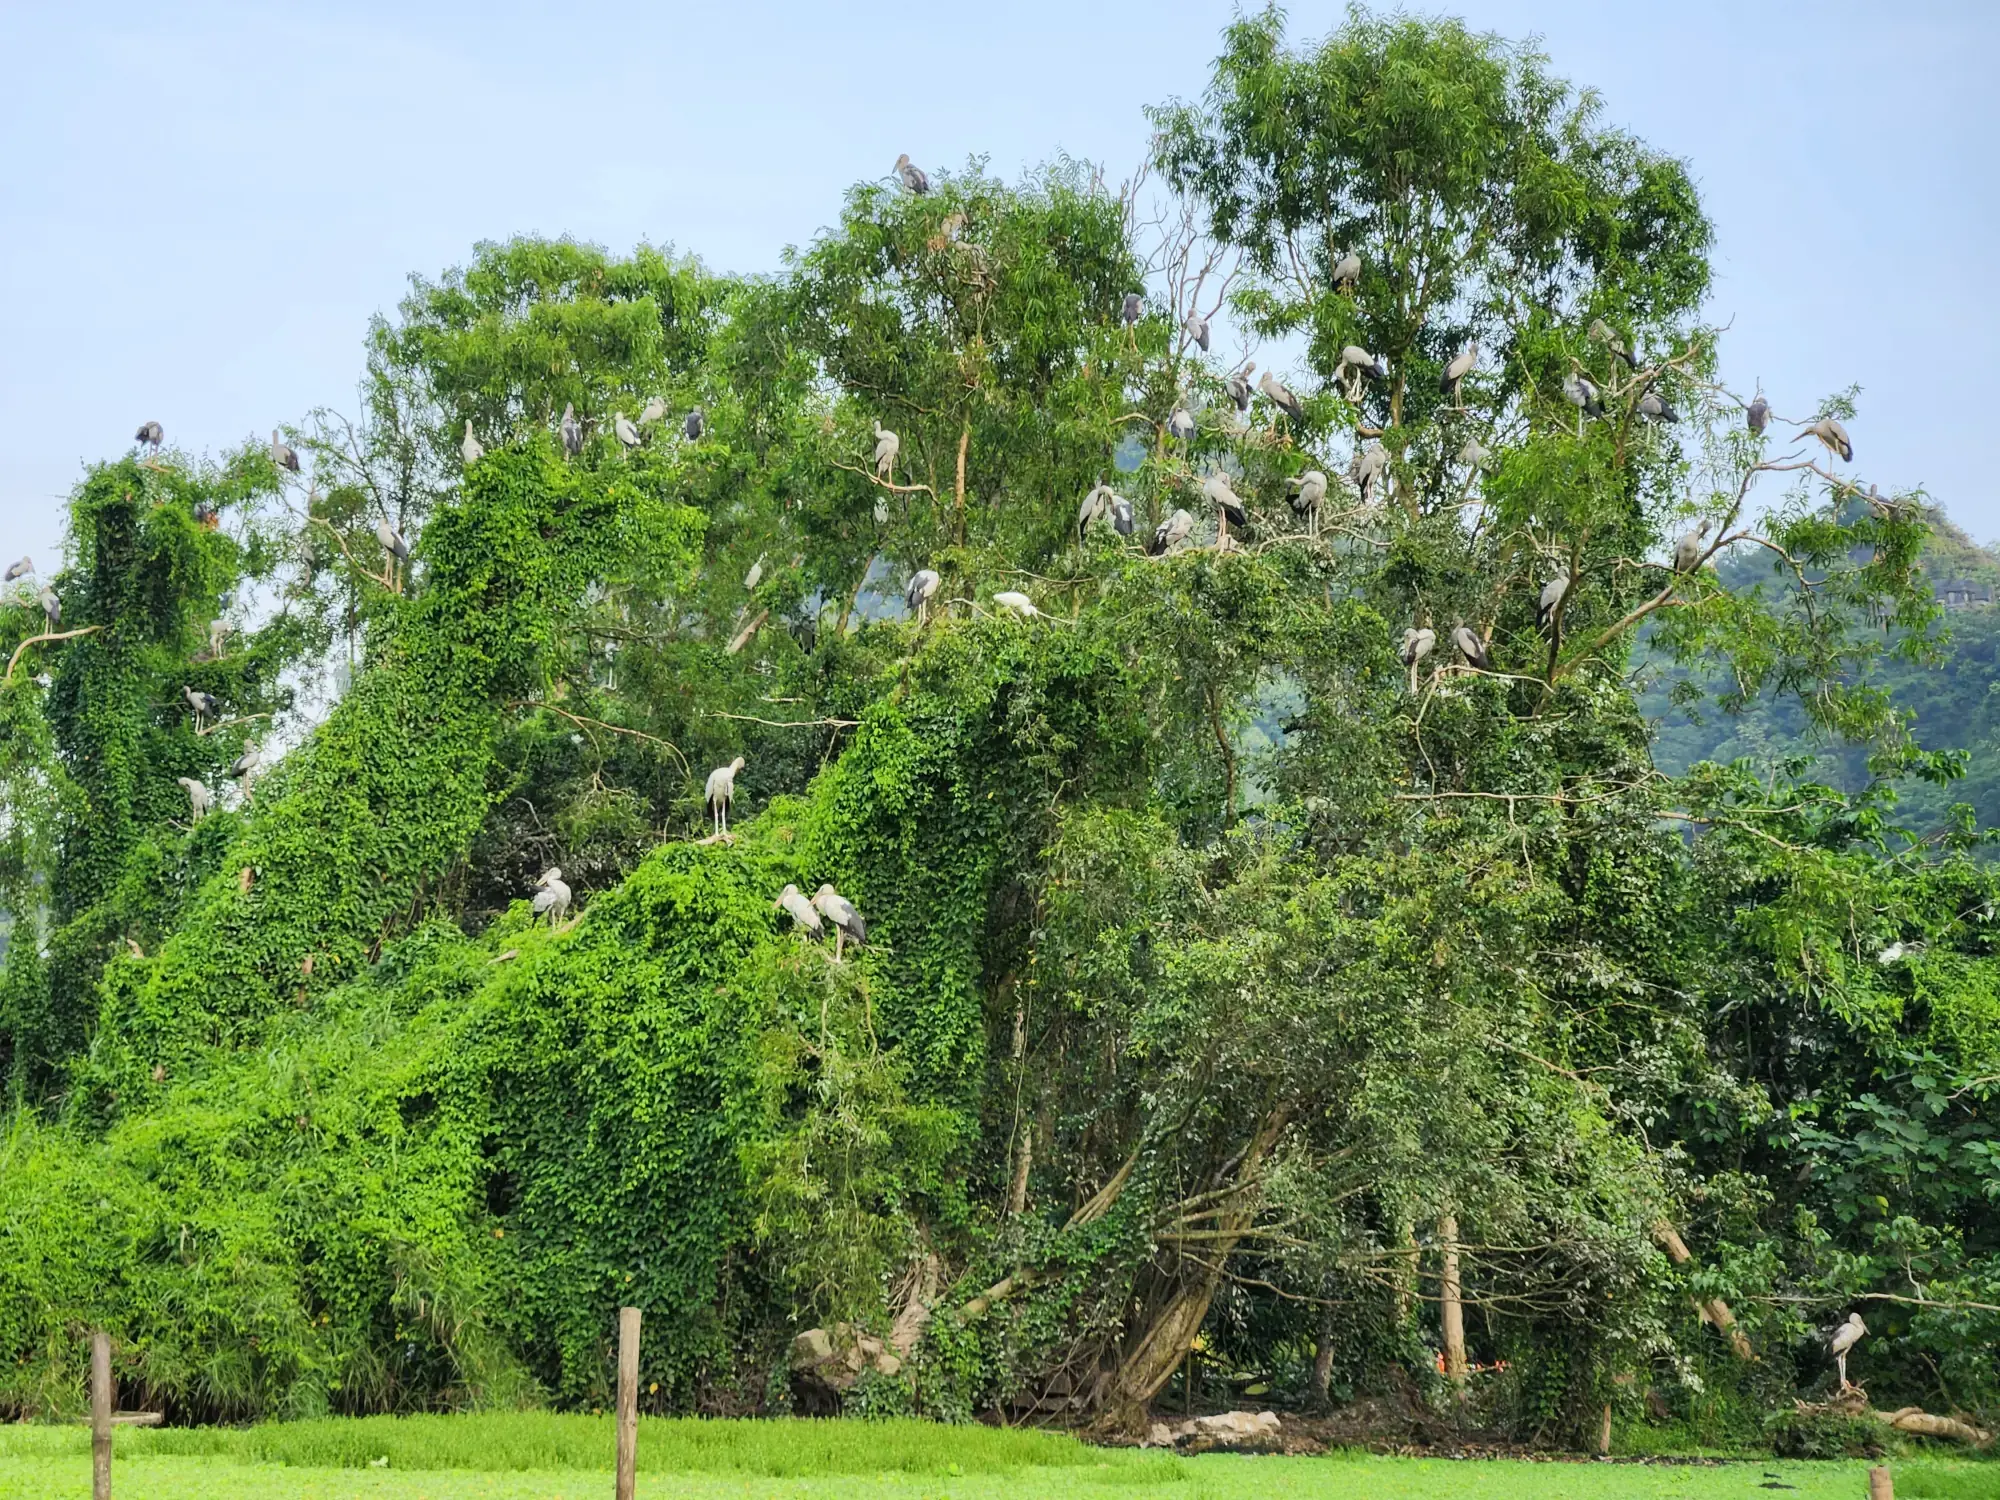 Thung Nham bird sanctuary